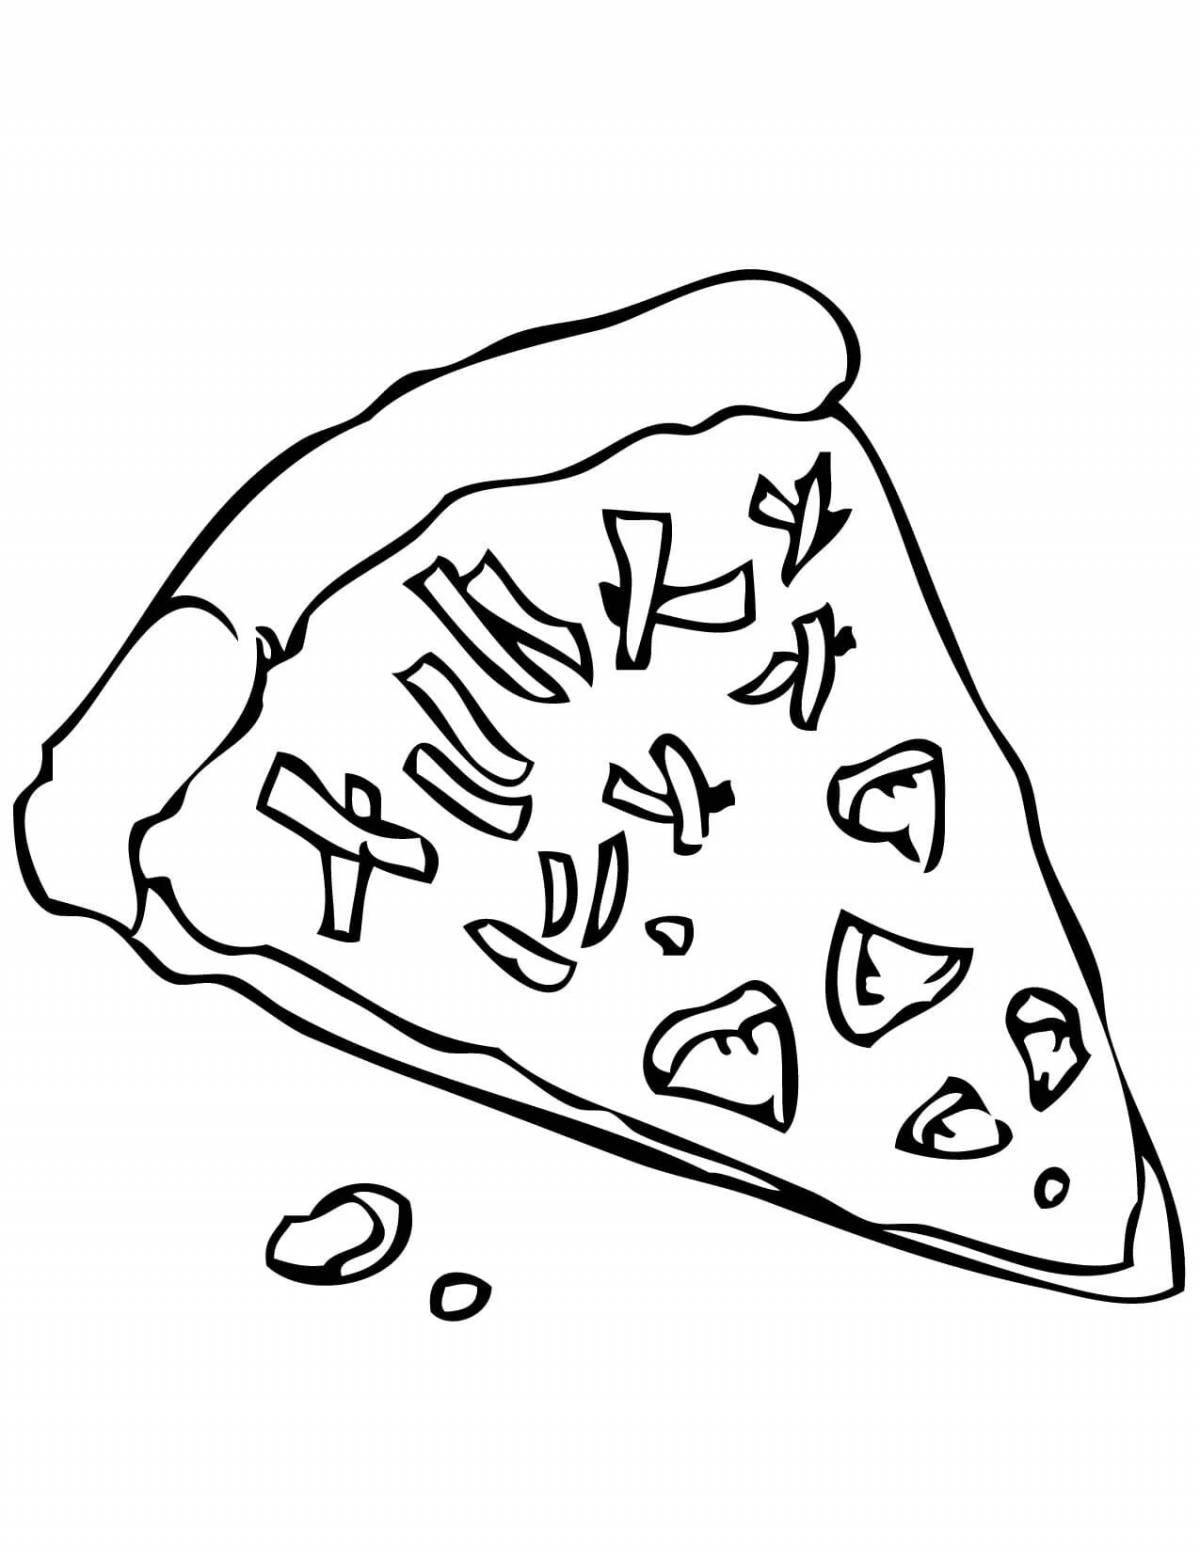 Delicious pizza coloring page